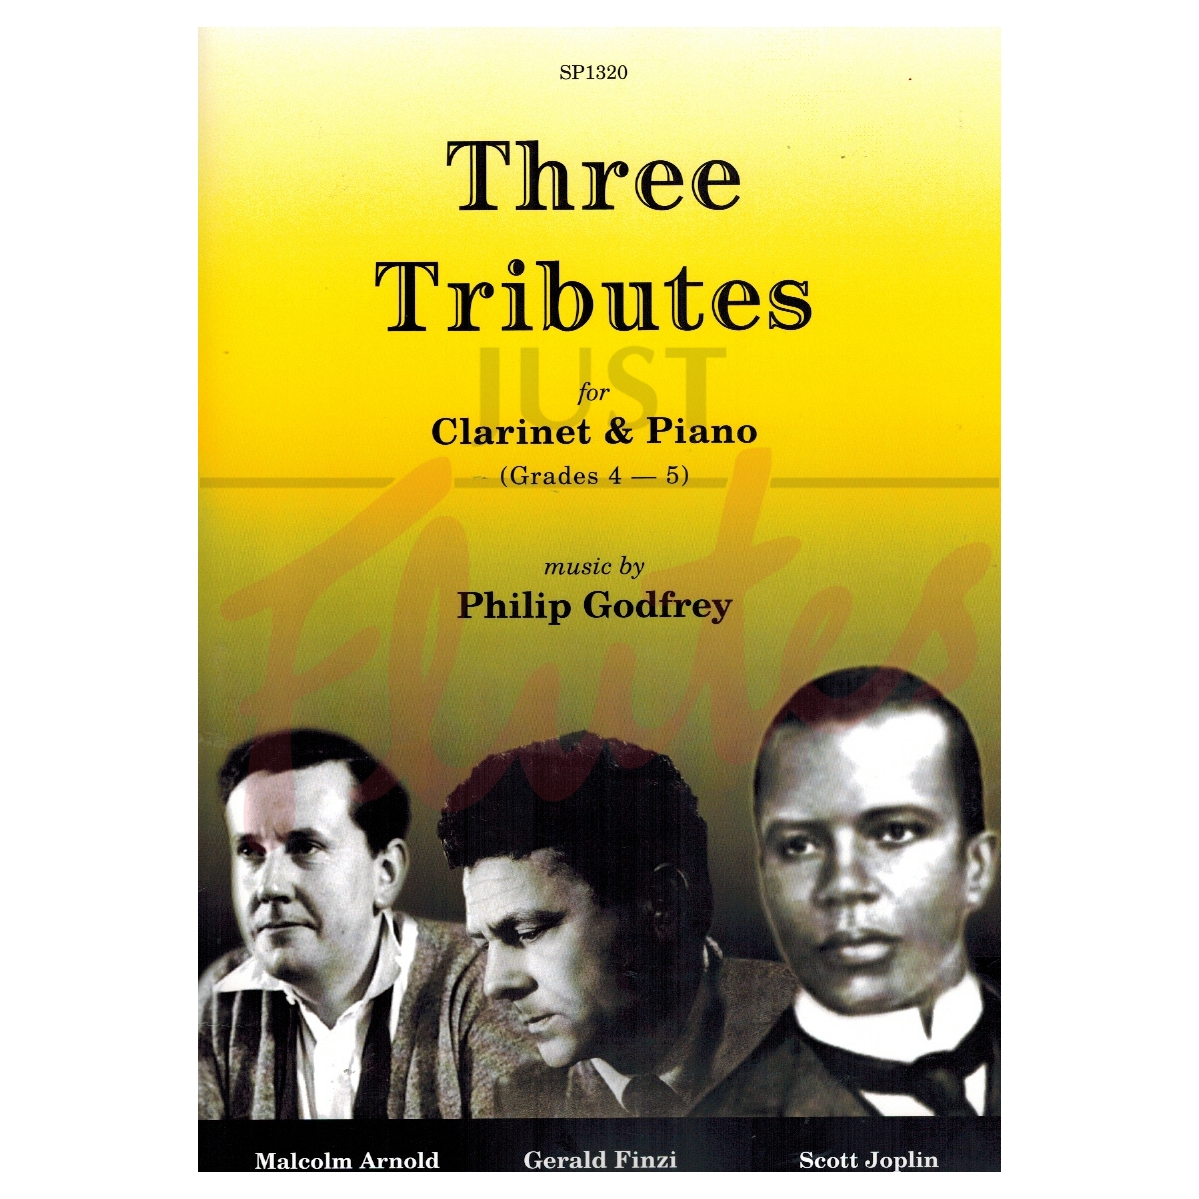 Three Tributes